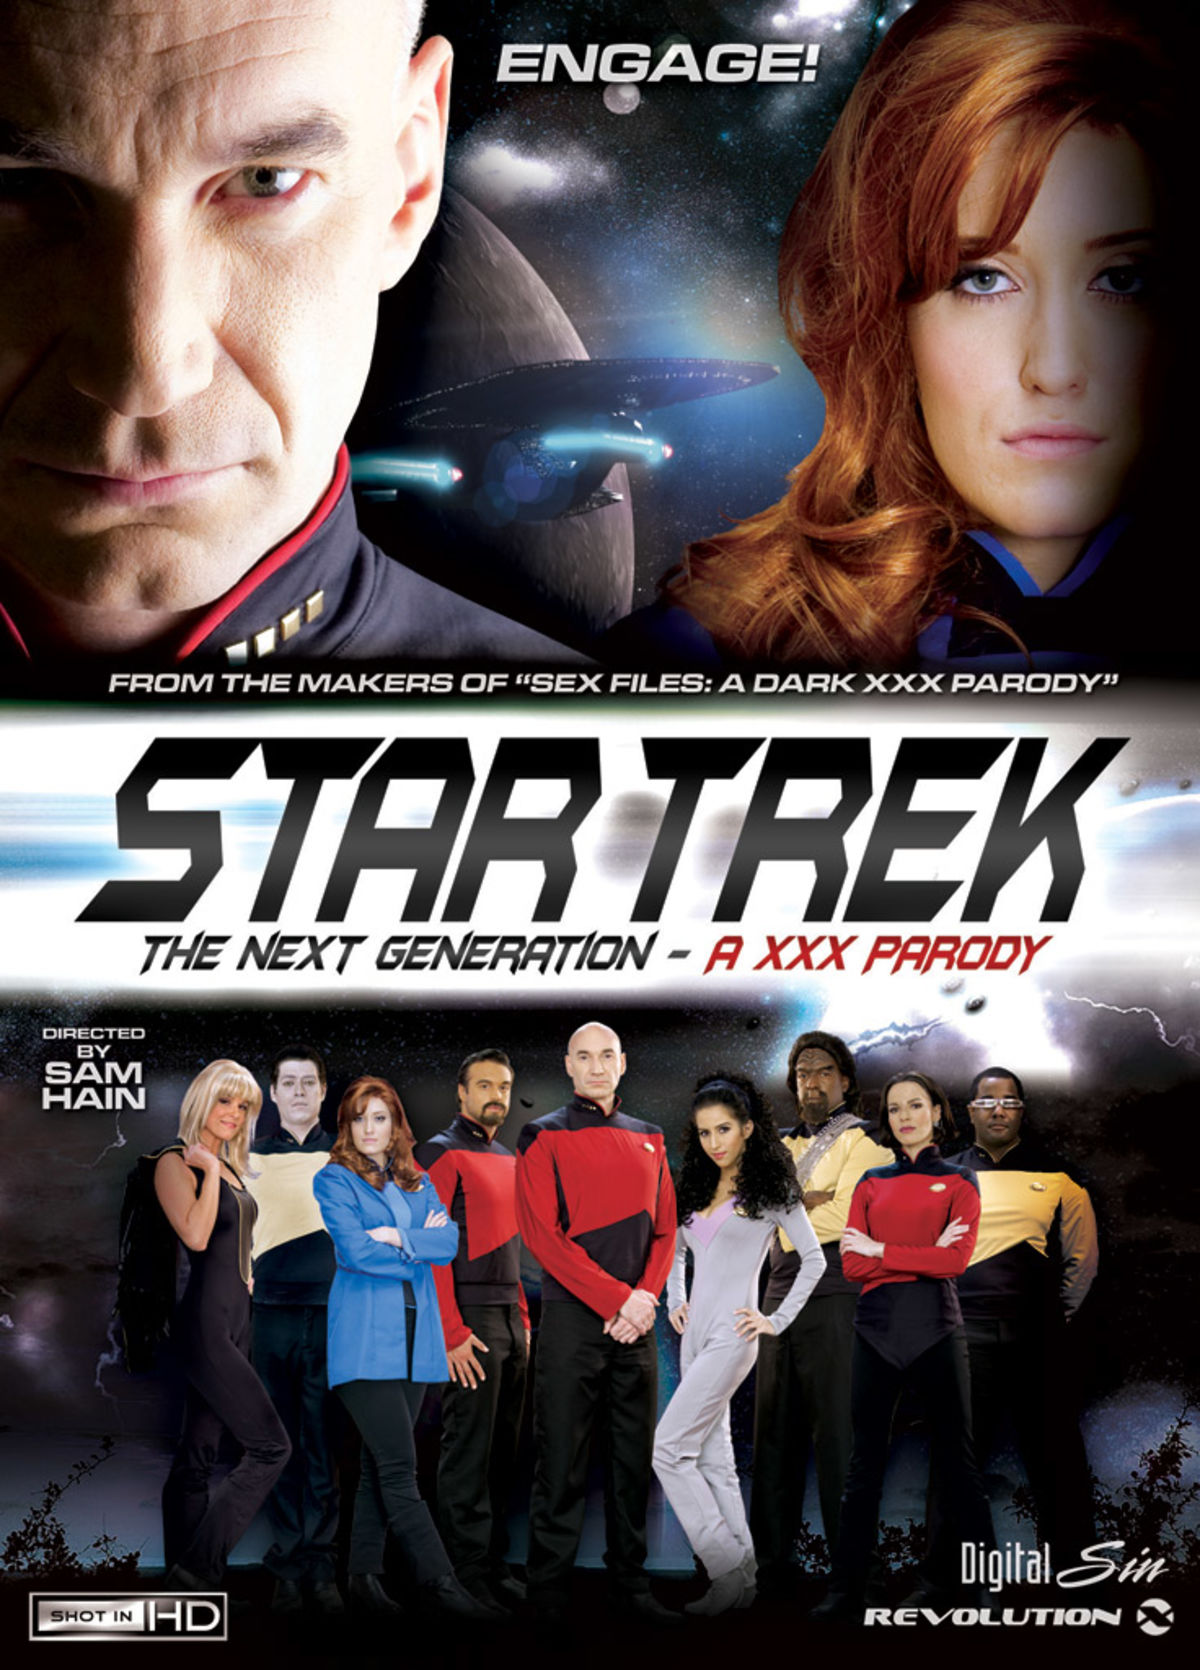 Star Trek Porn Comic Yarr - Tasha Yar returns in SFW Star Trek: Next Gen XXX parody trailer